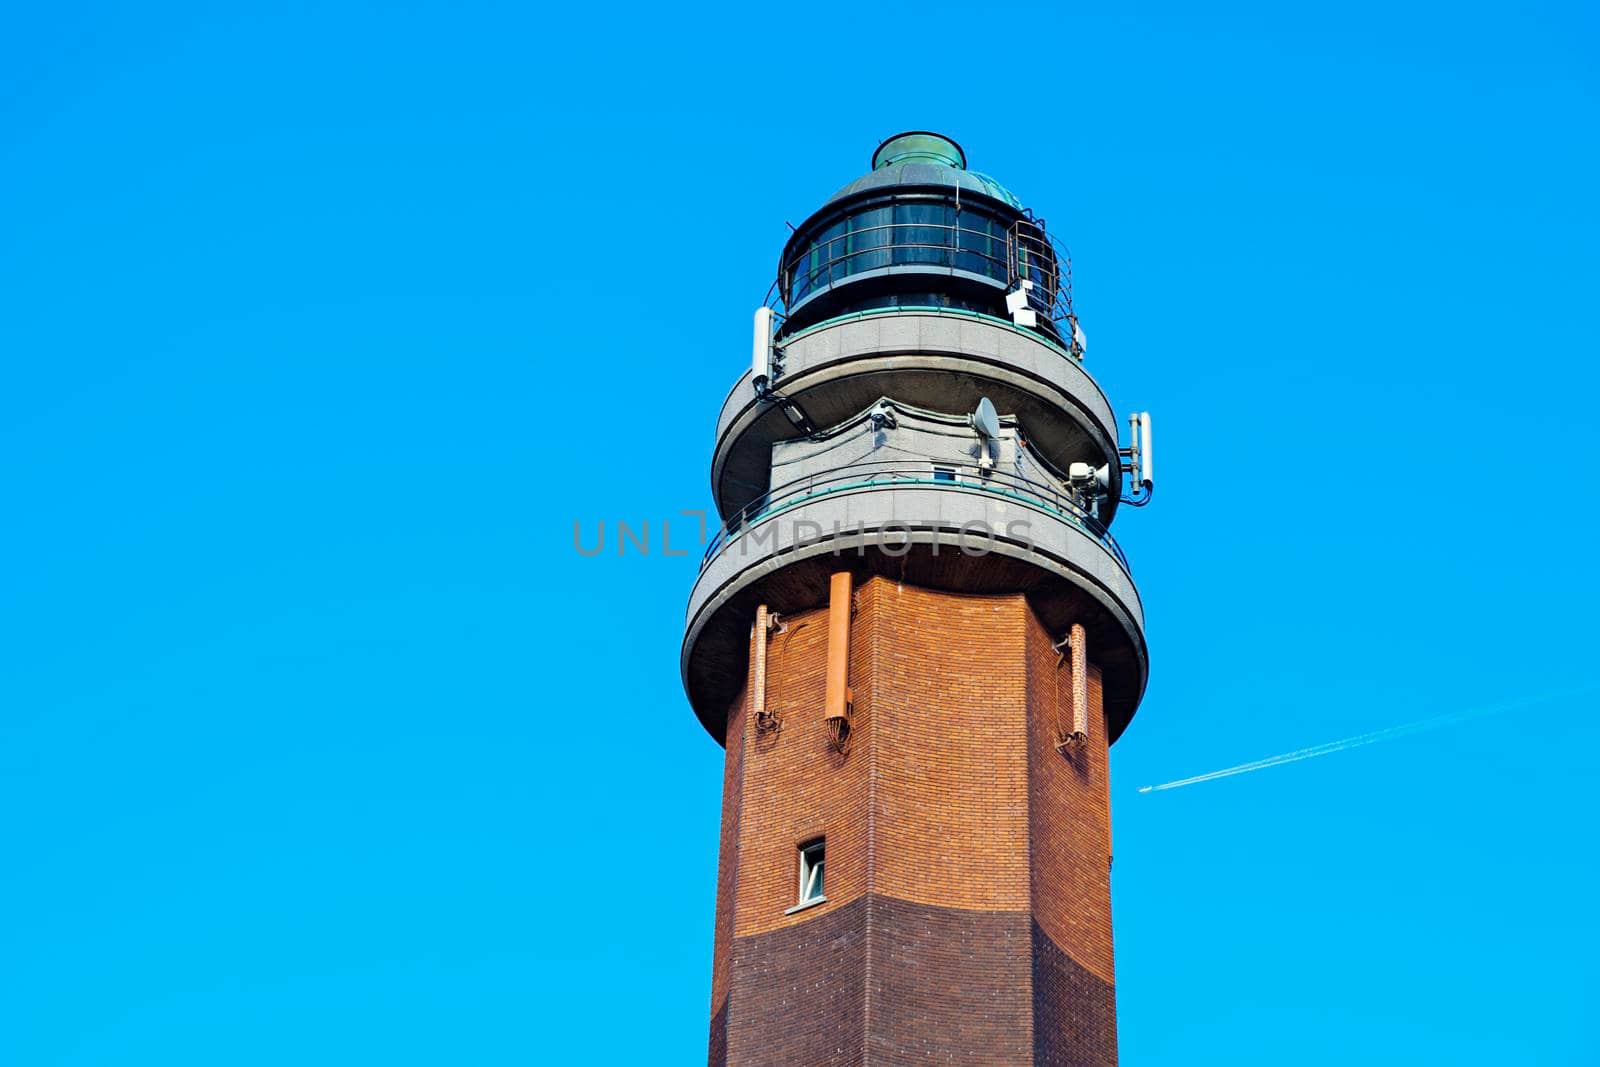 Le Touquet Lighthouse. Le Touquet, Nord-Pas-de-Calais-Picardy, France. Wireless antennas installed on the top.